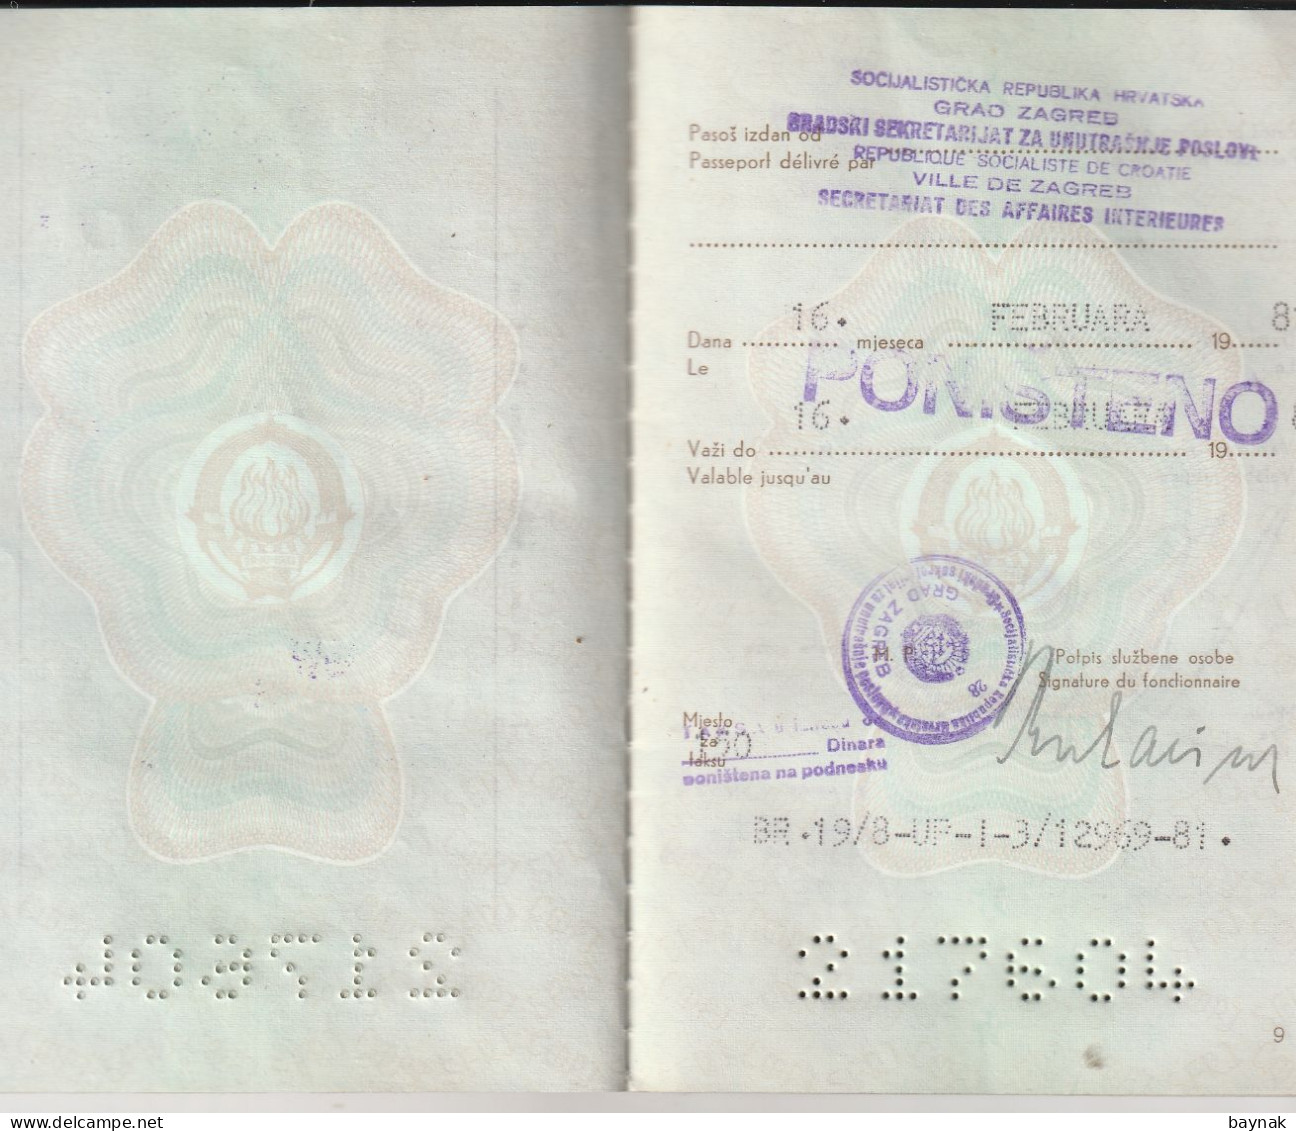 P304 -   SFR YUGOSLAVIA   --  PASSPORT    -  LADY  - 1981  --  VISA:  KENYA  ( EAST AFRICA ), MALAYSIA, SINGAPORE, - Documents Historiques